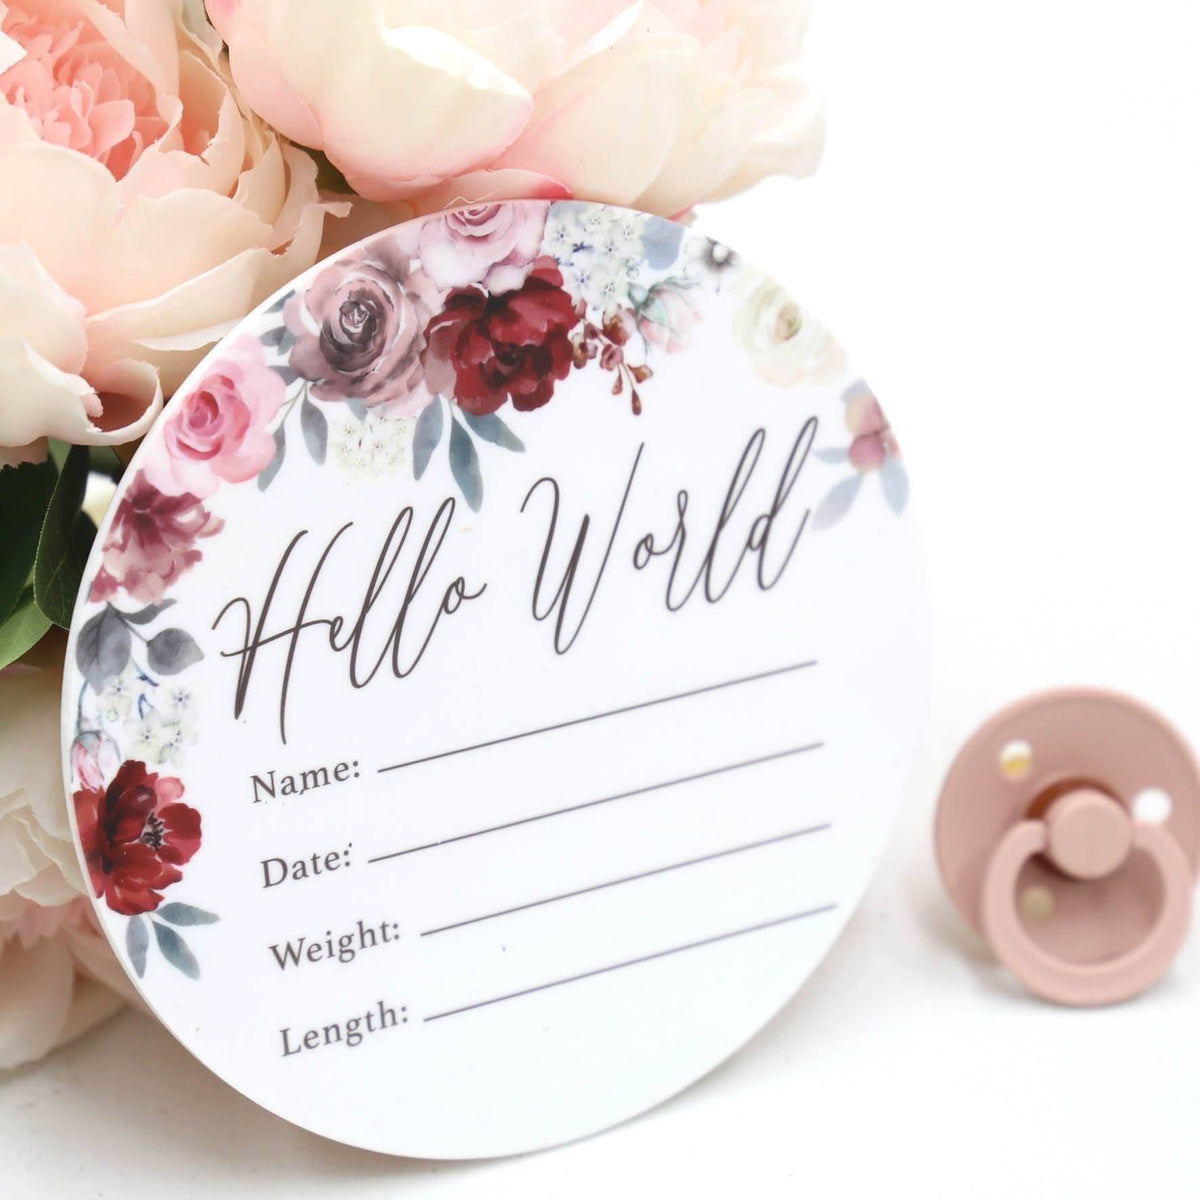 Birth Announcement Card- Hello World Pink, Mauve, Cream, Red Floral